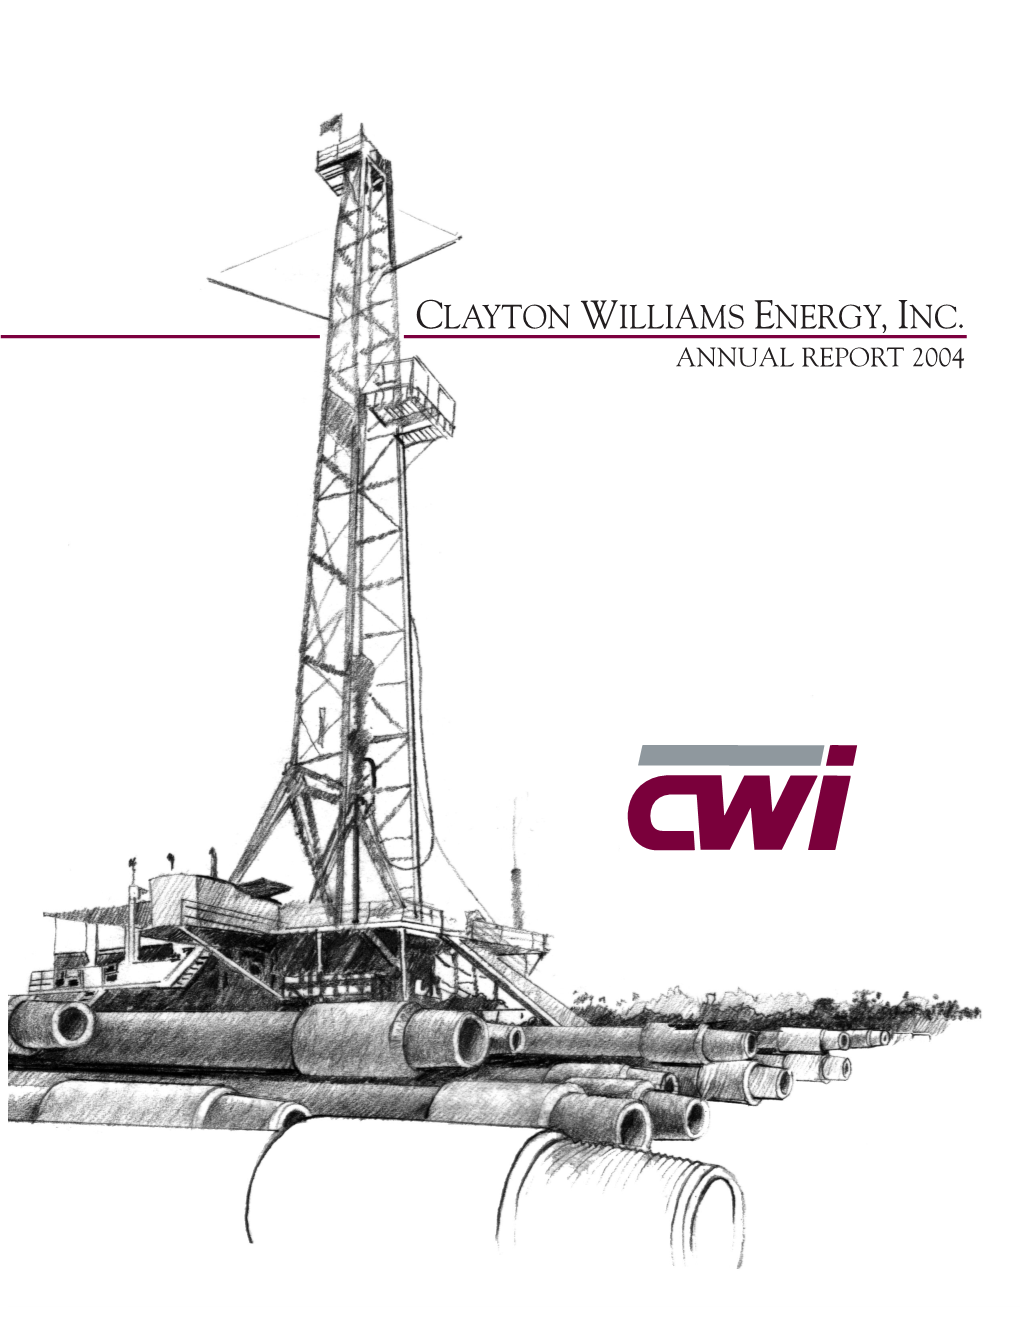 CLAYTON WILLIAMS ENERGY, INC. ANNUAL REPORT 2004 Layton Williams Energy, Inc